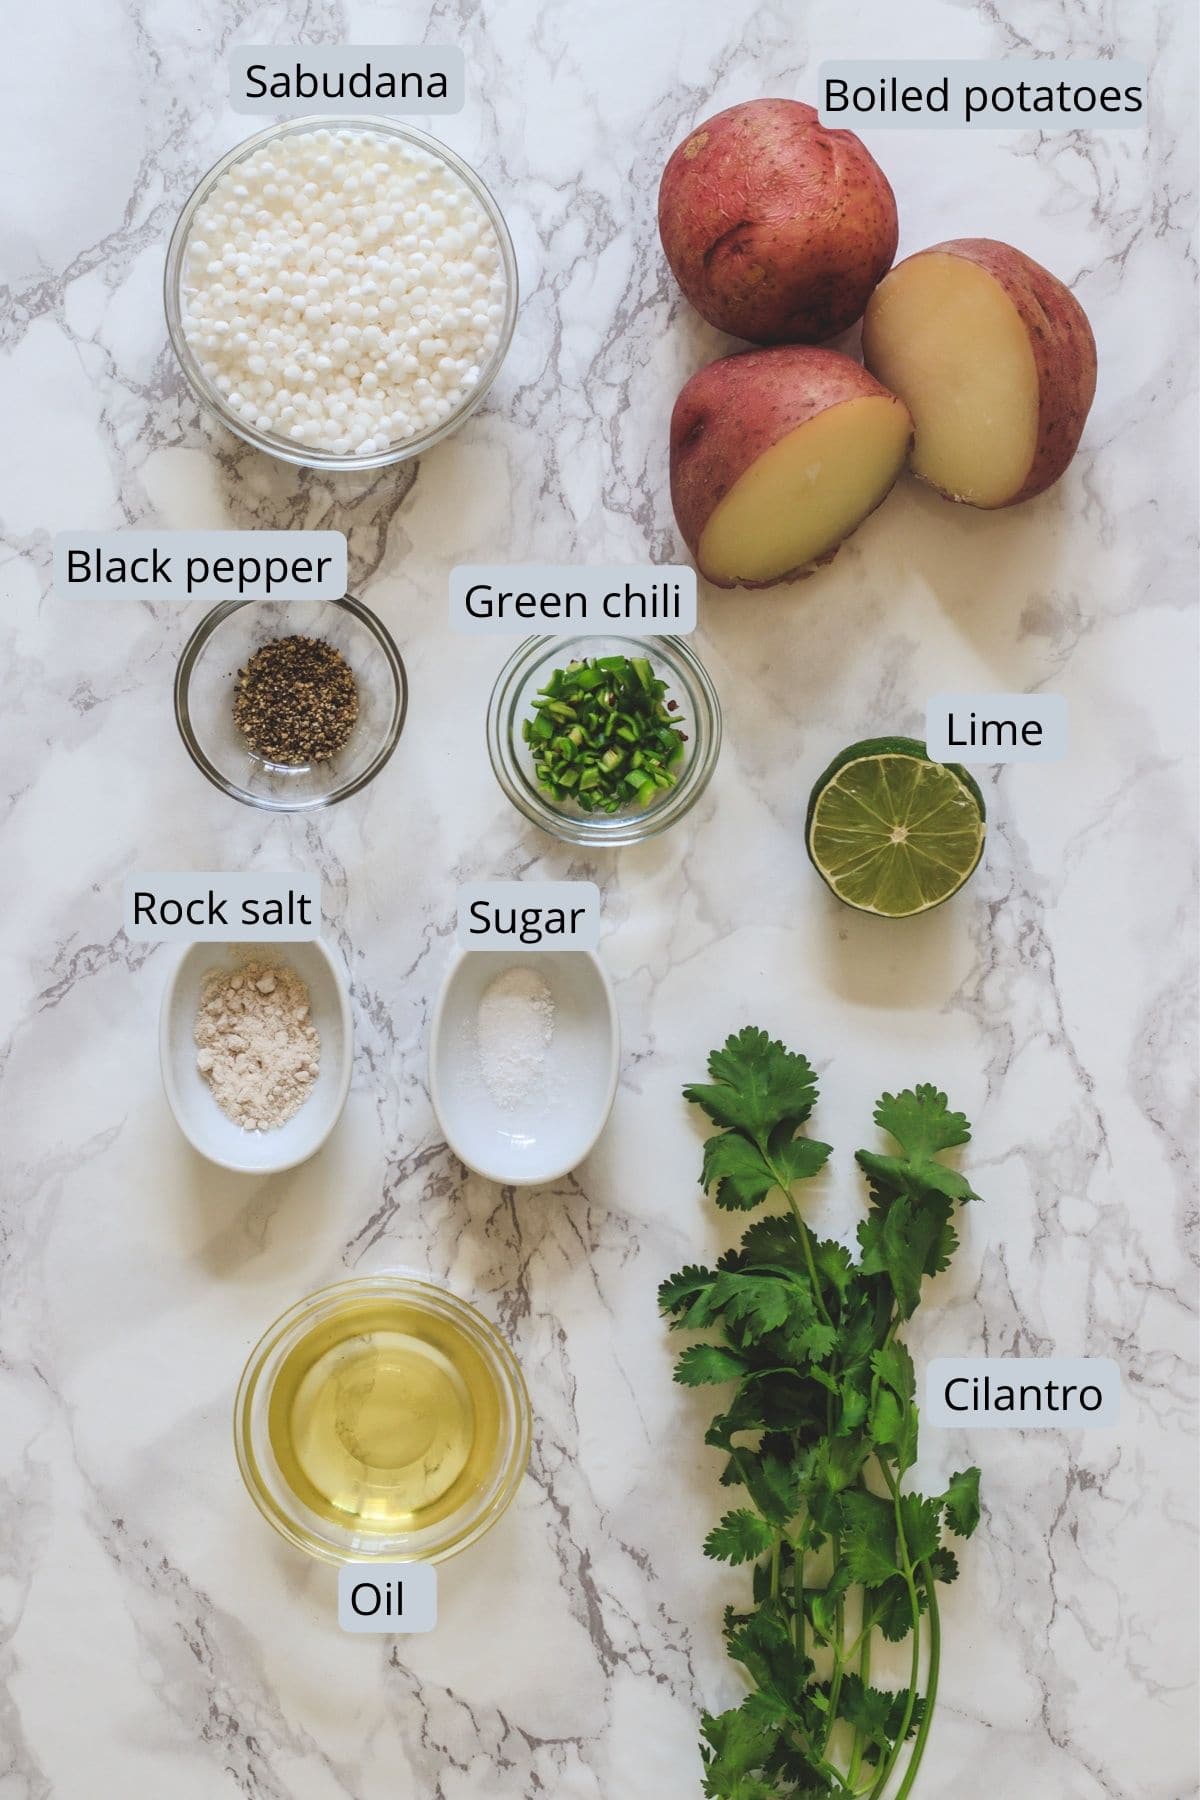 ingredients used in sabudana tikki includes tapioca, potatoes, salt, pepper, sugar, lime, cilantro, green chili and oill